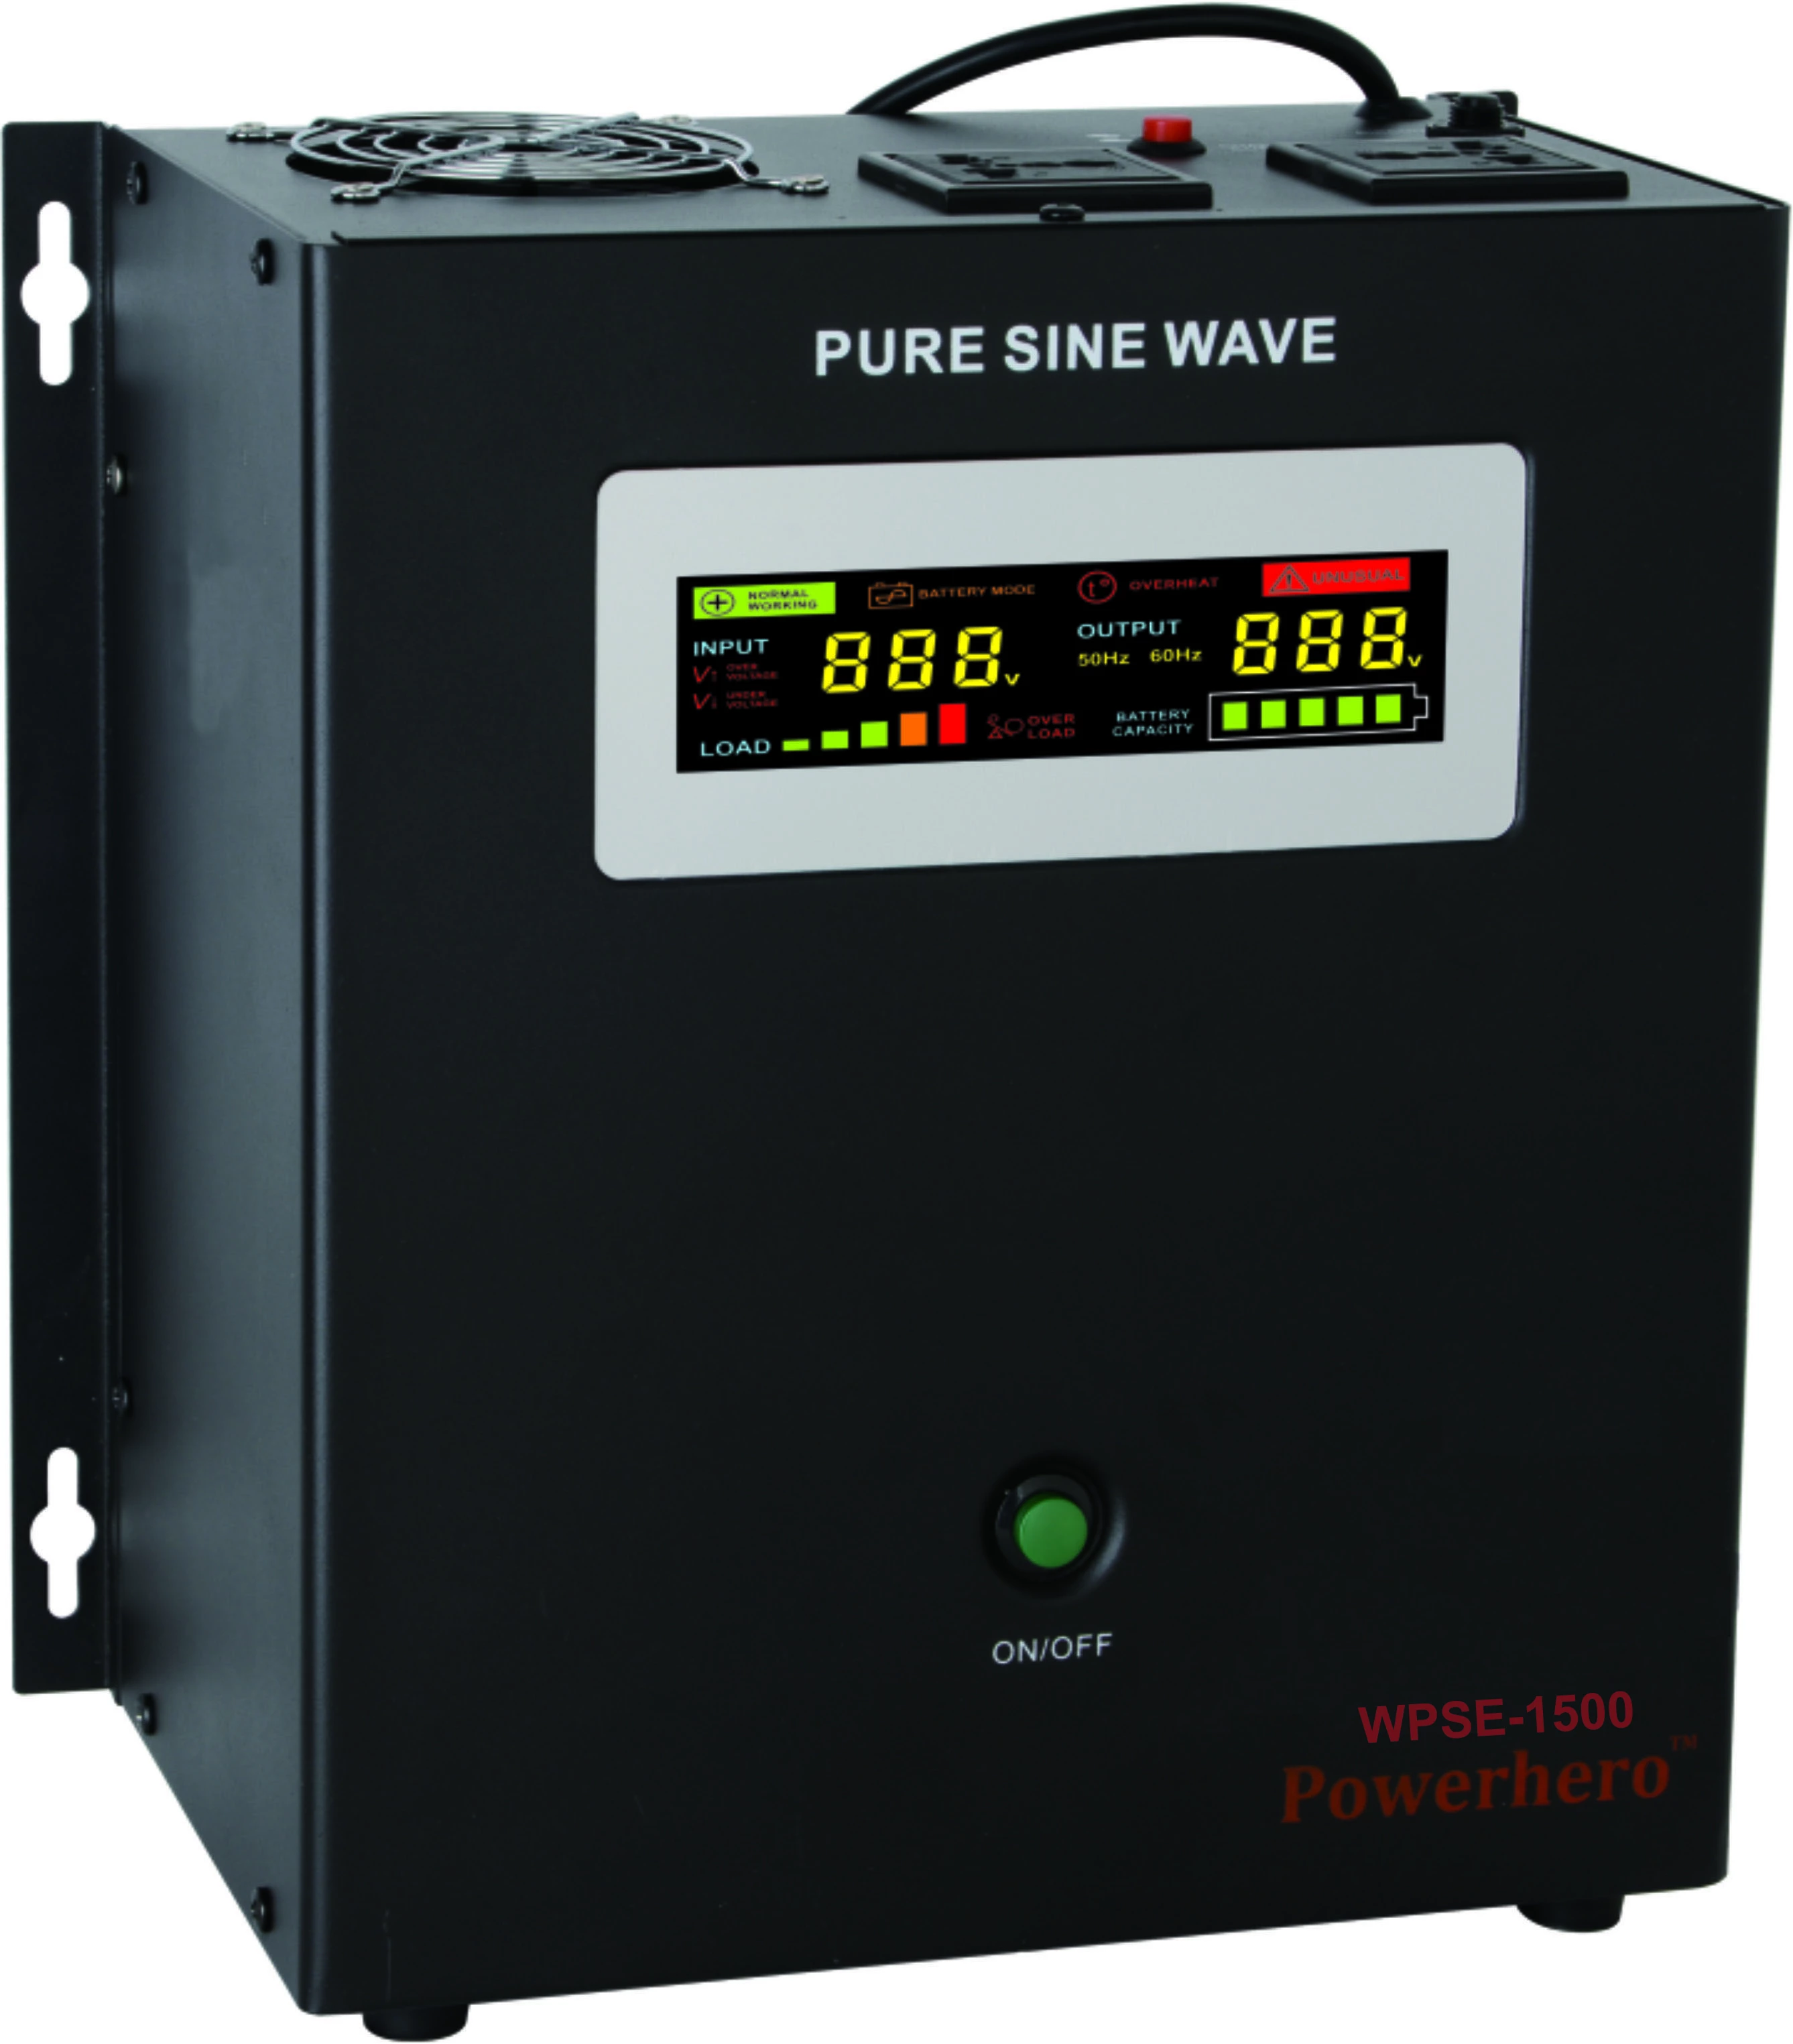 WPSE-1500 Wall type pure sine wave inverter 1